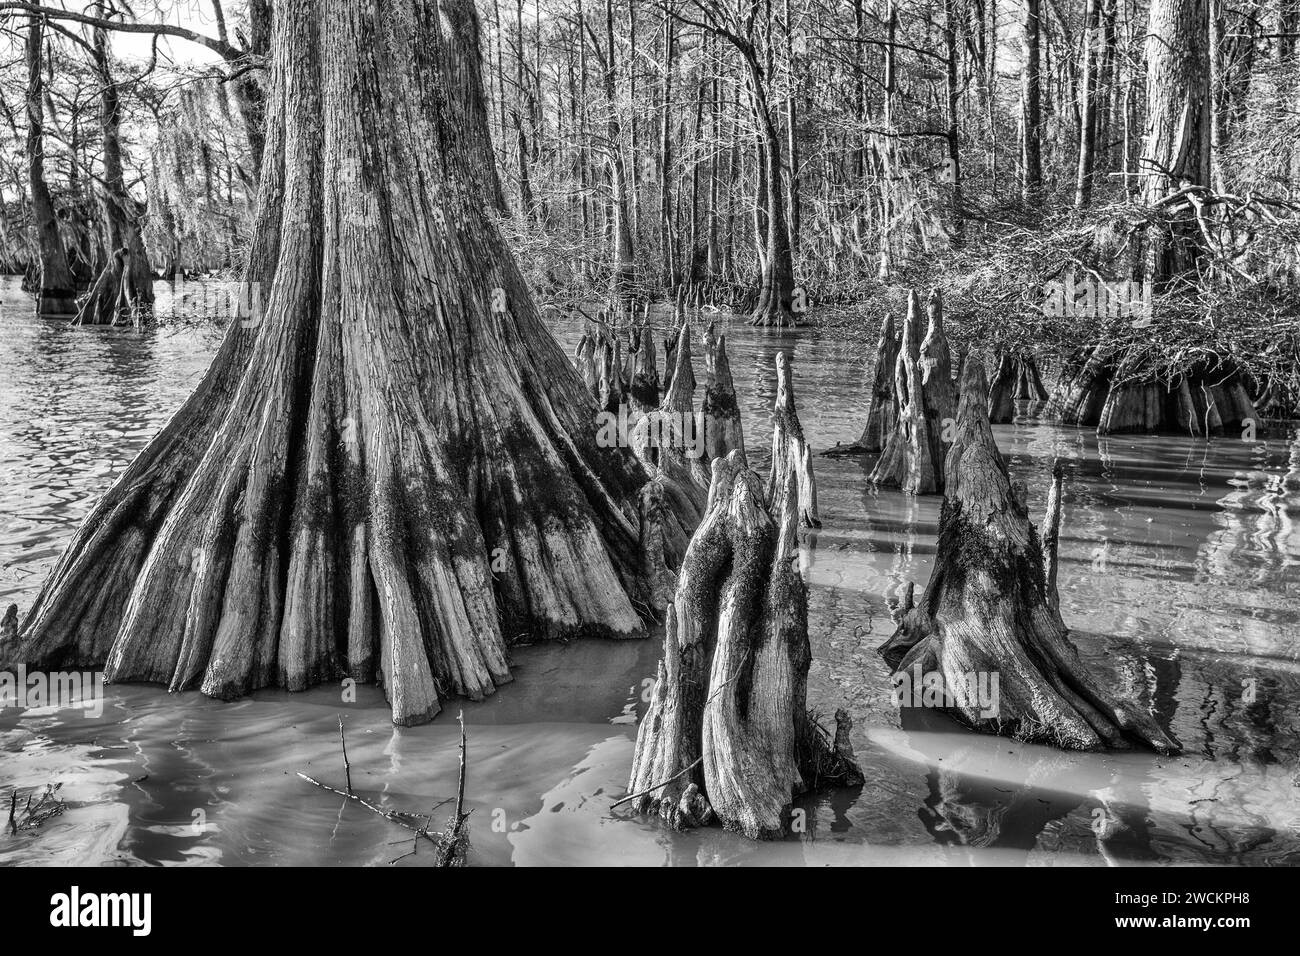 Zypressenknie und alte, kahlköpfige Zypressen im Lake Dauterive im Atchafalaya Basin oder Swamp in Louisiana. Stockfoto